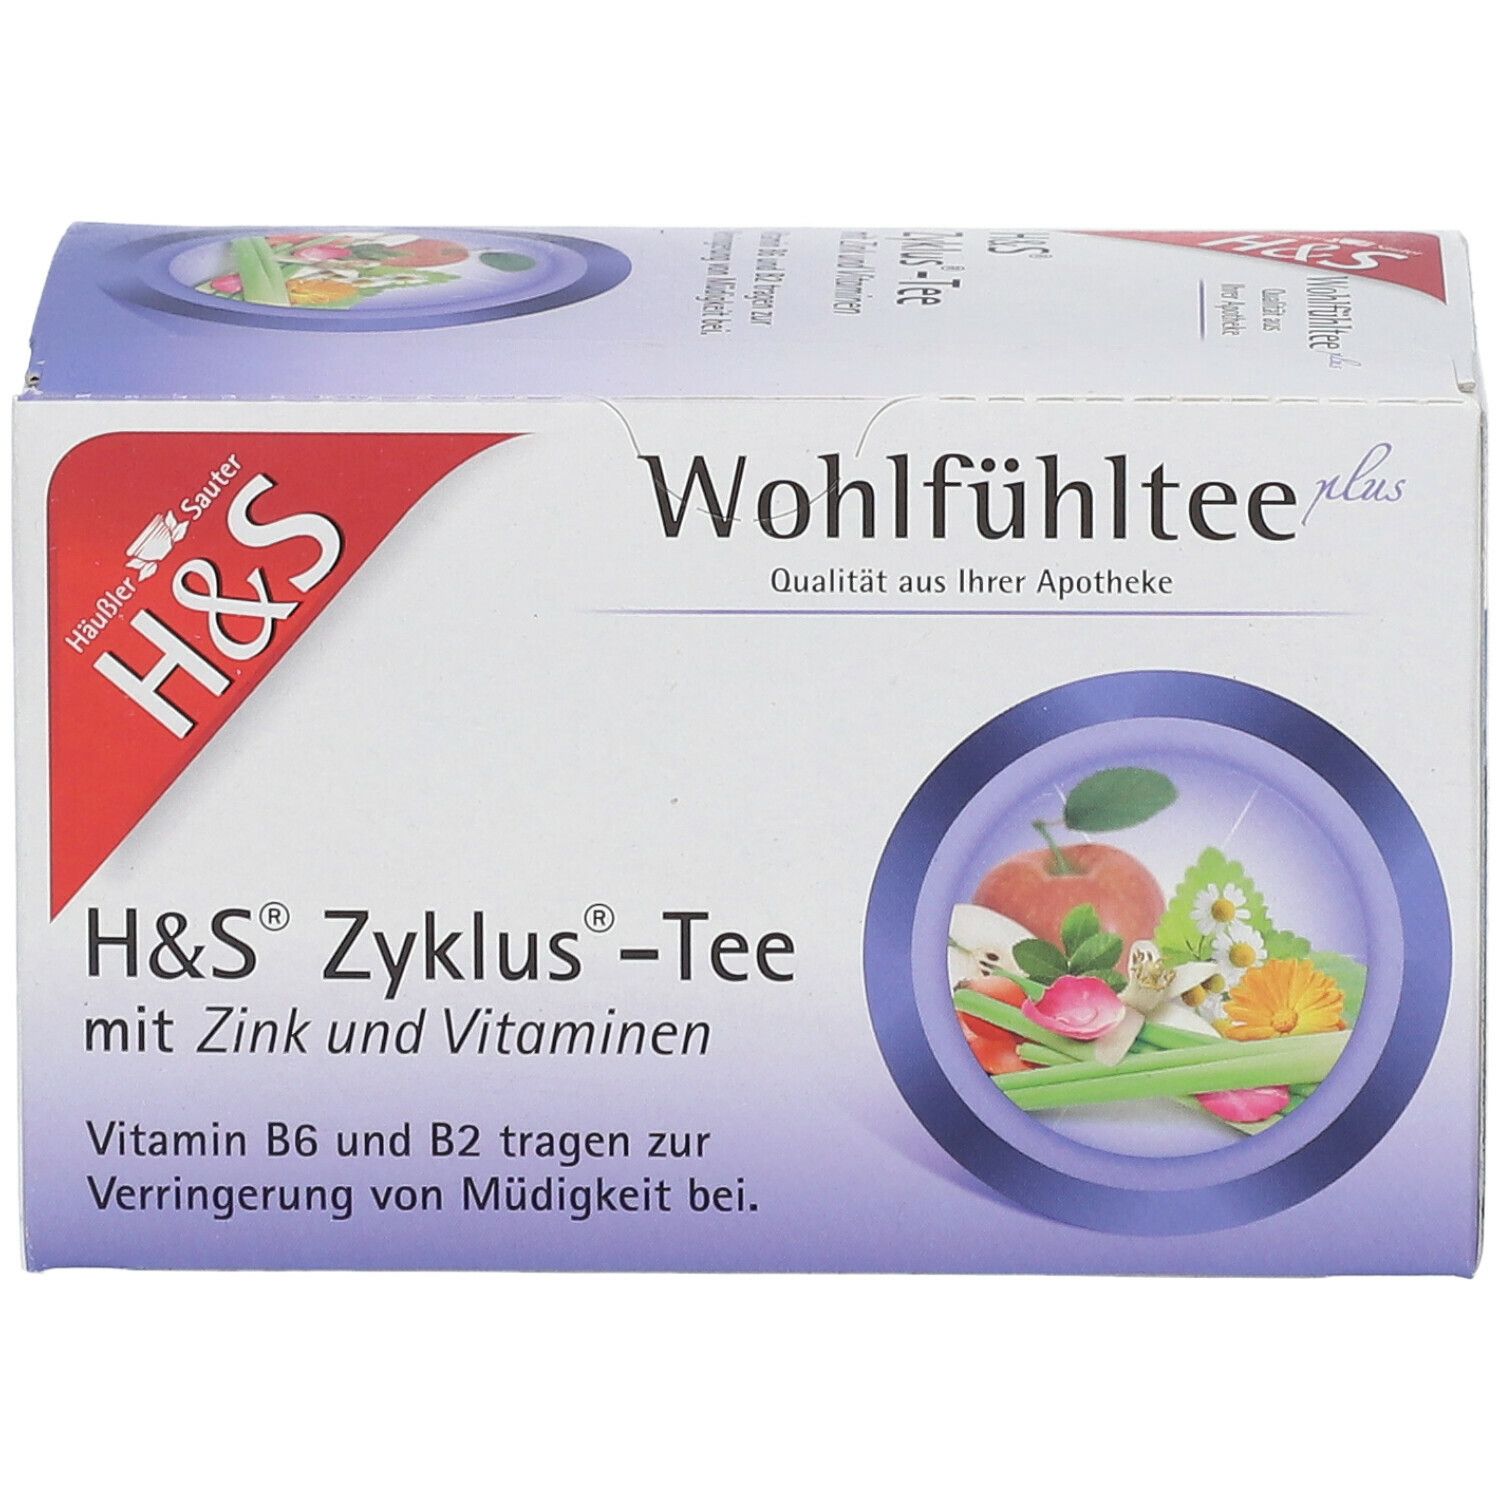 H&S Zyklus®-Tee